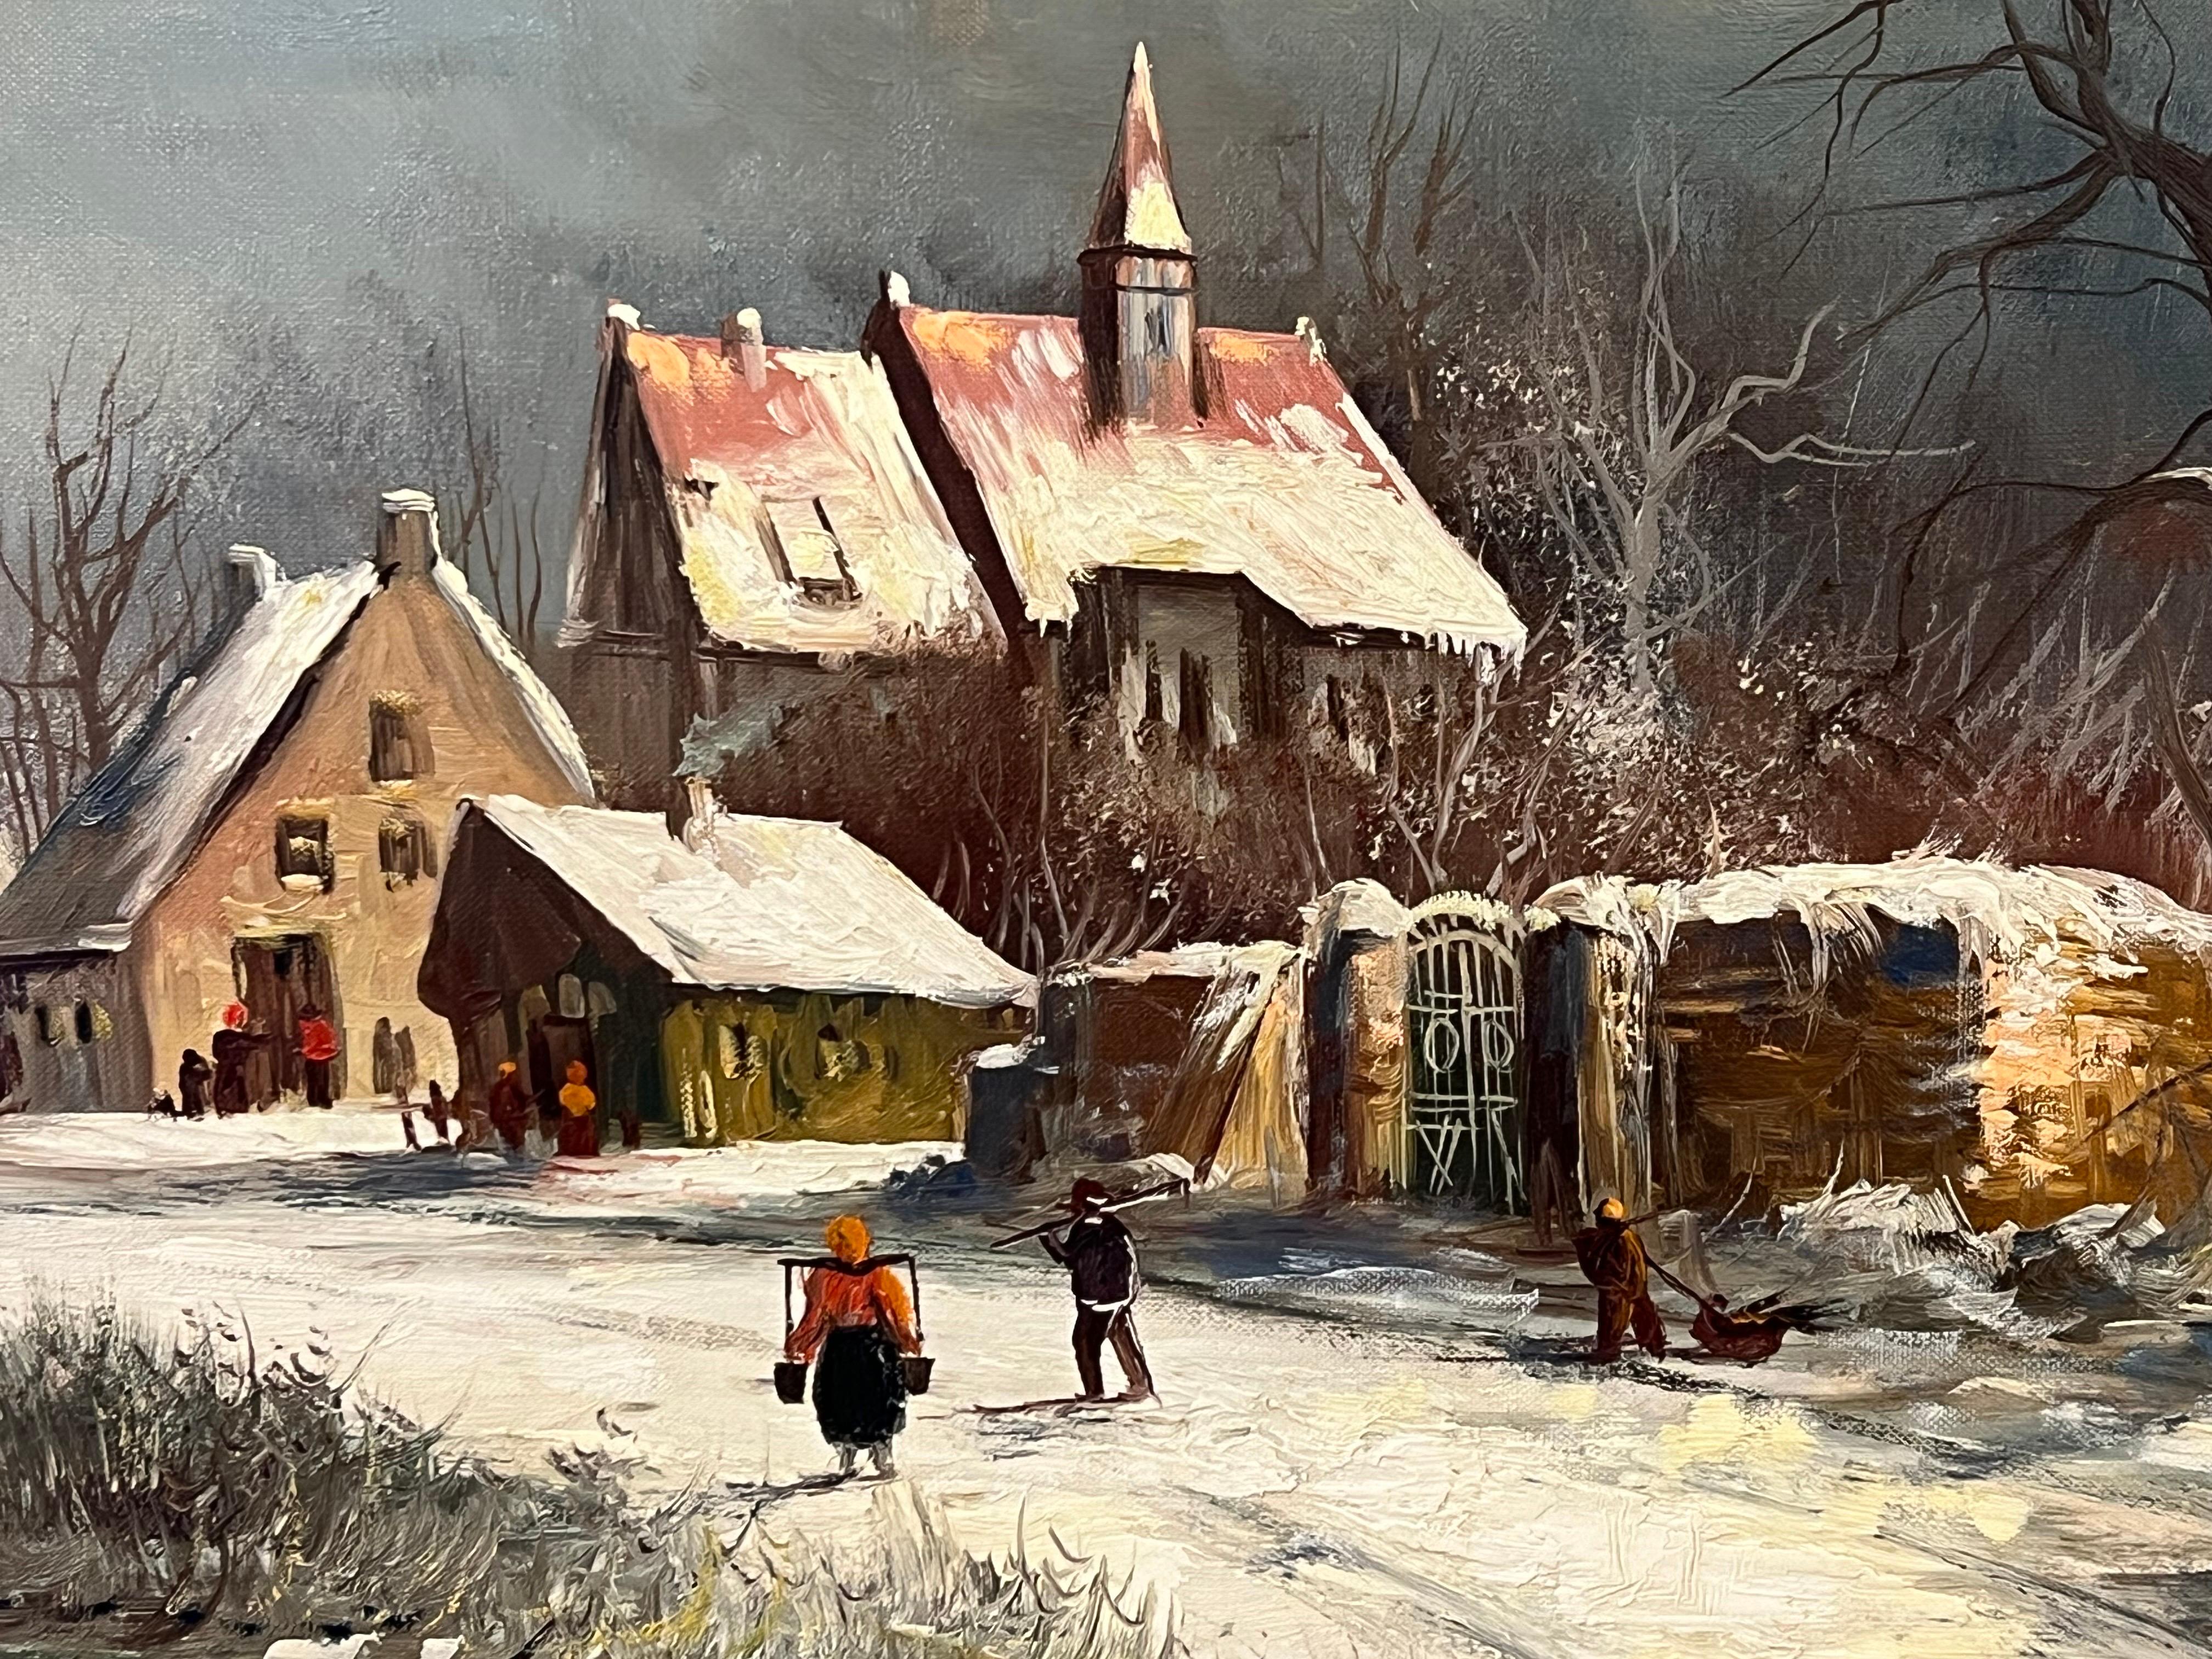 European Village in Winter Snow with Figures & Frozen Pond by German Artist For Sale 5